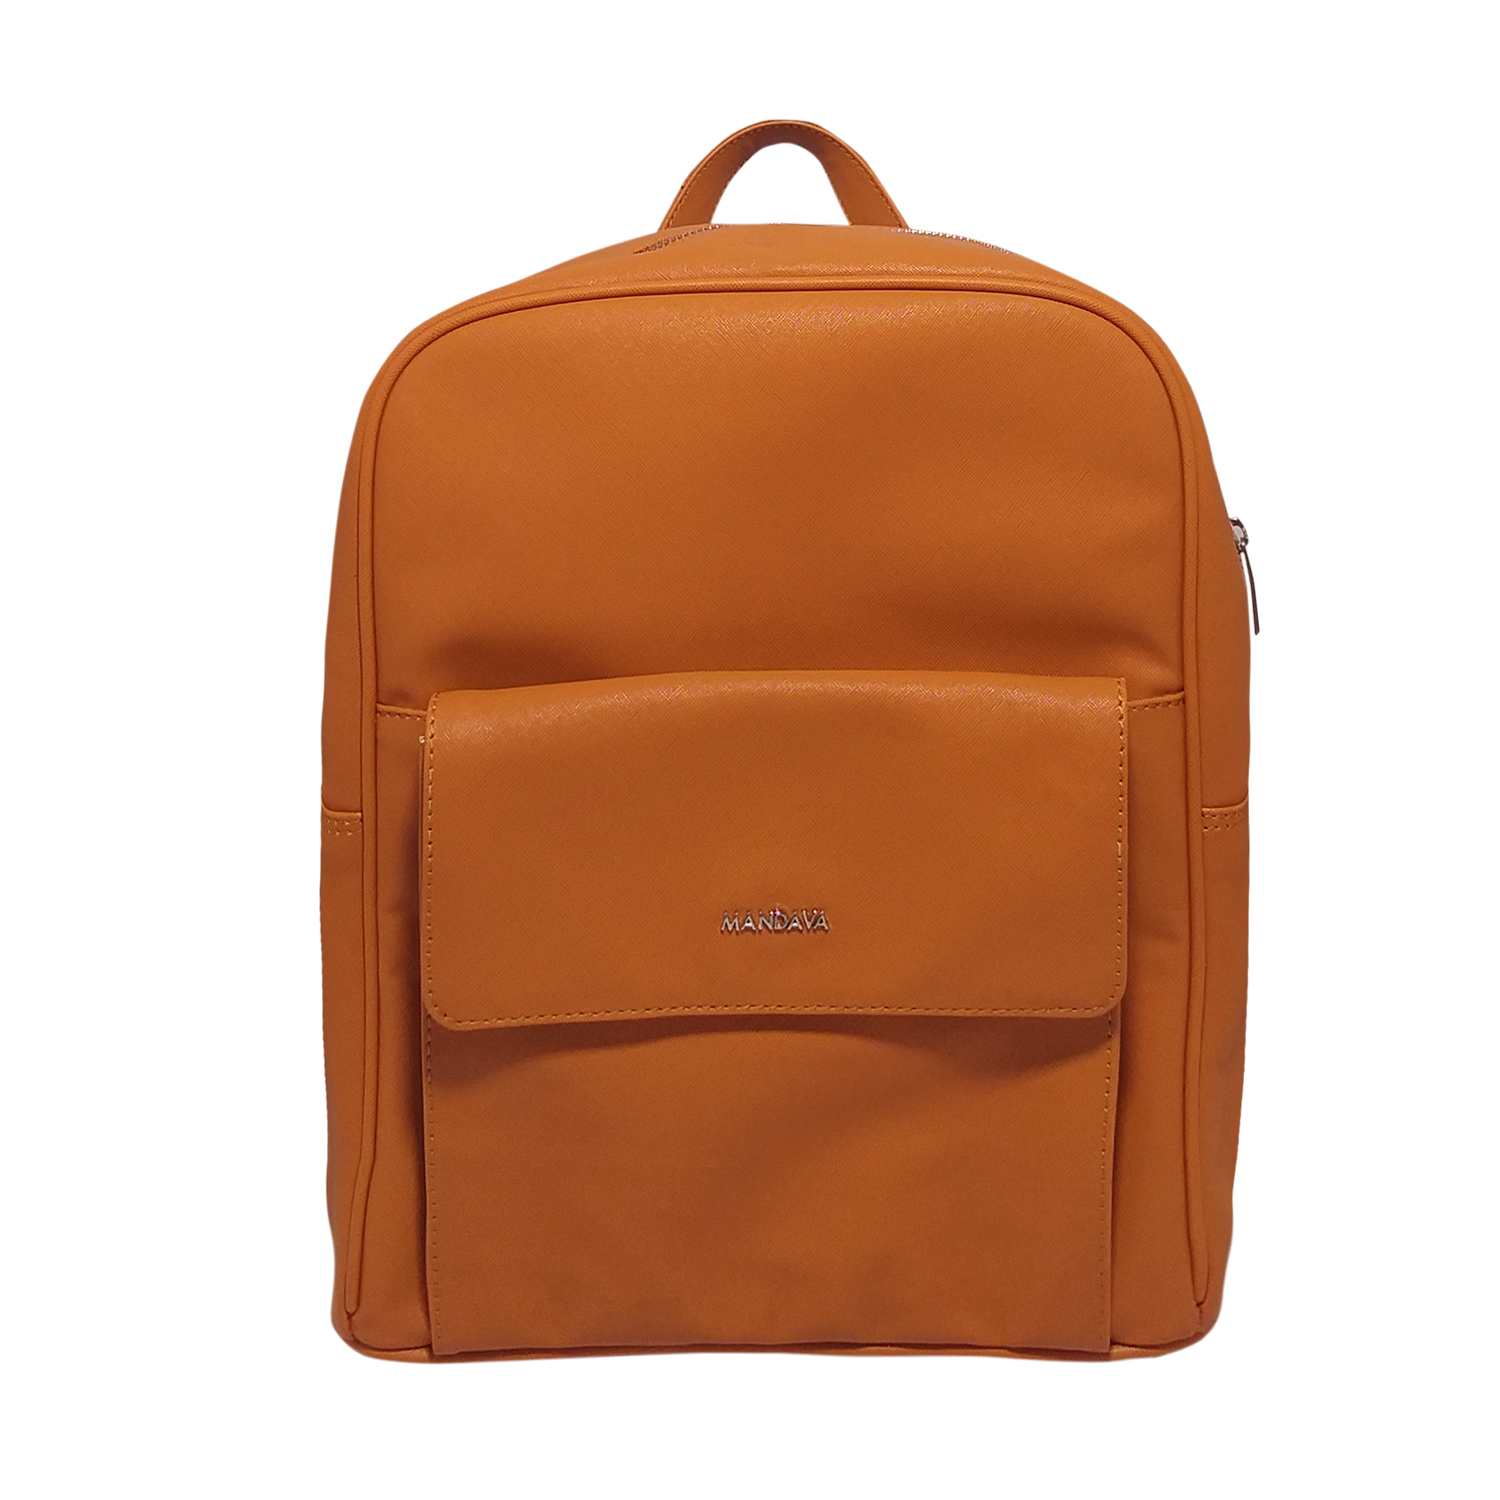 MANDAVA Casual Fashion Vegan Leather College Backpack School Bag Mini Backpack for Women and Girls  Tan 